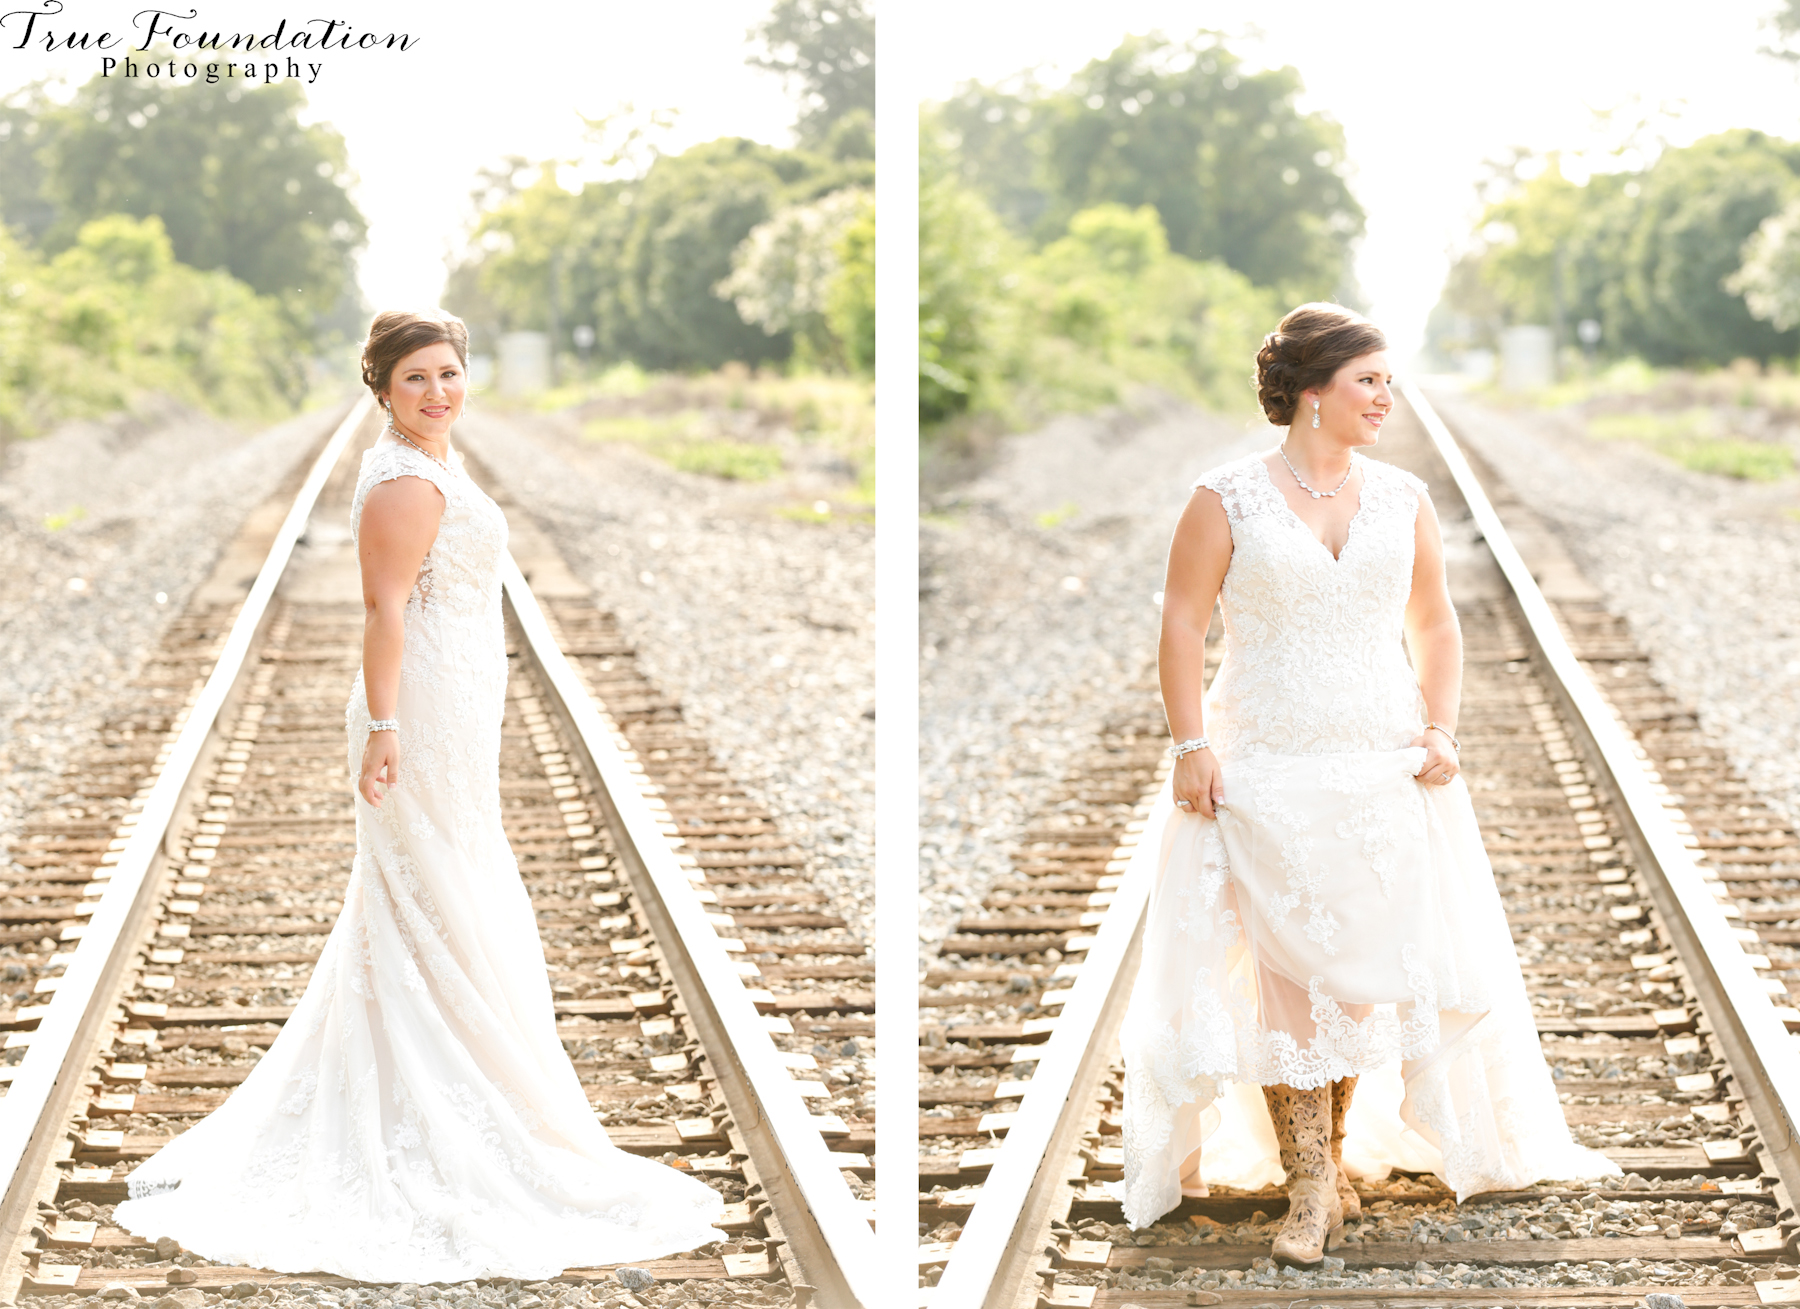 Bridal - Portrait - Photography - Photos - Hendersonville - NC - Shelby - Photographers - Farm - Country - Pinterest - Bride (11)